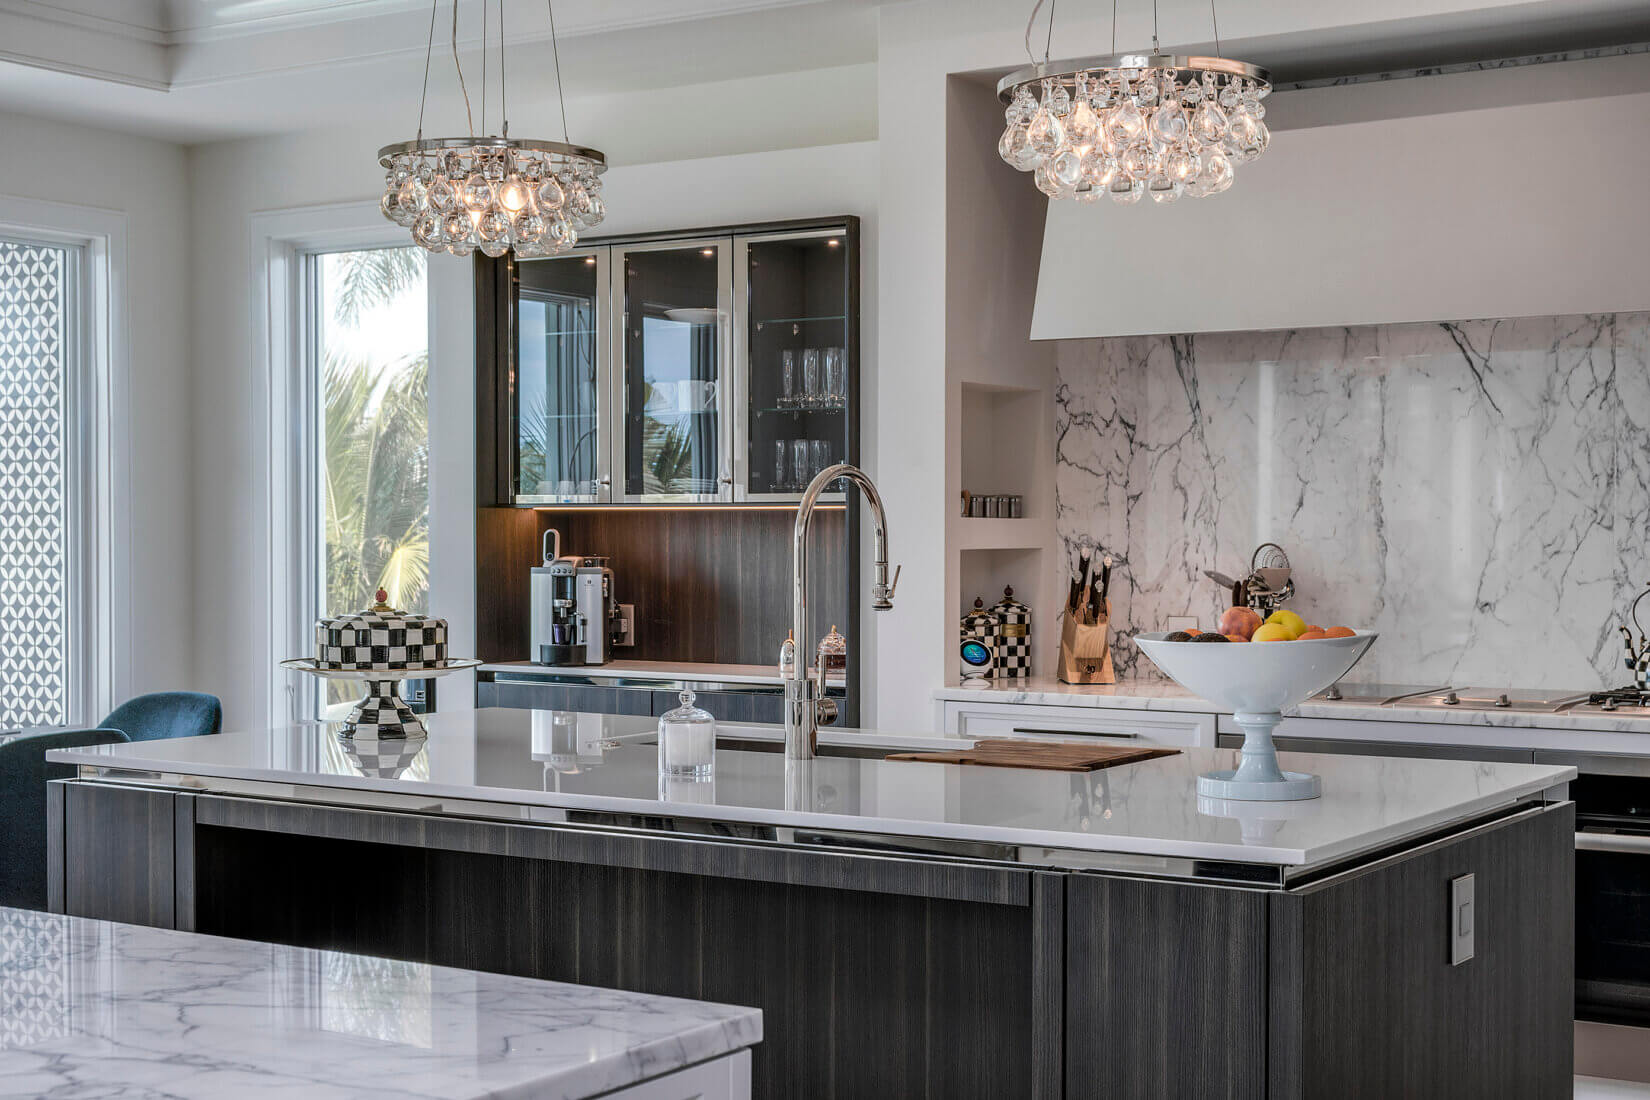 Upscale kitchen with elegant island, chandeliers and marble backsplash